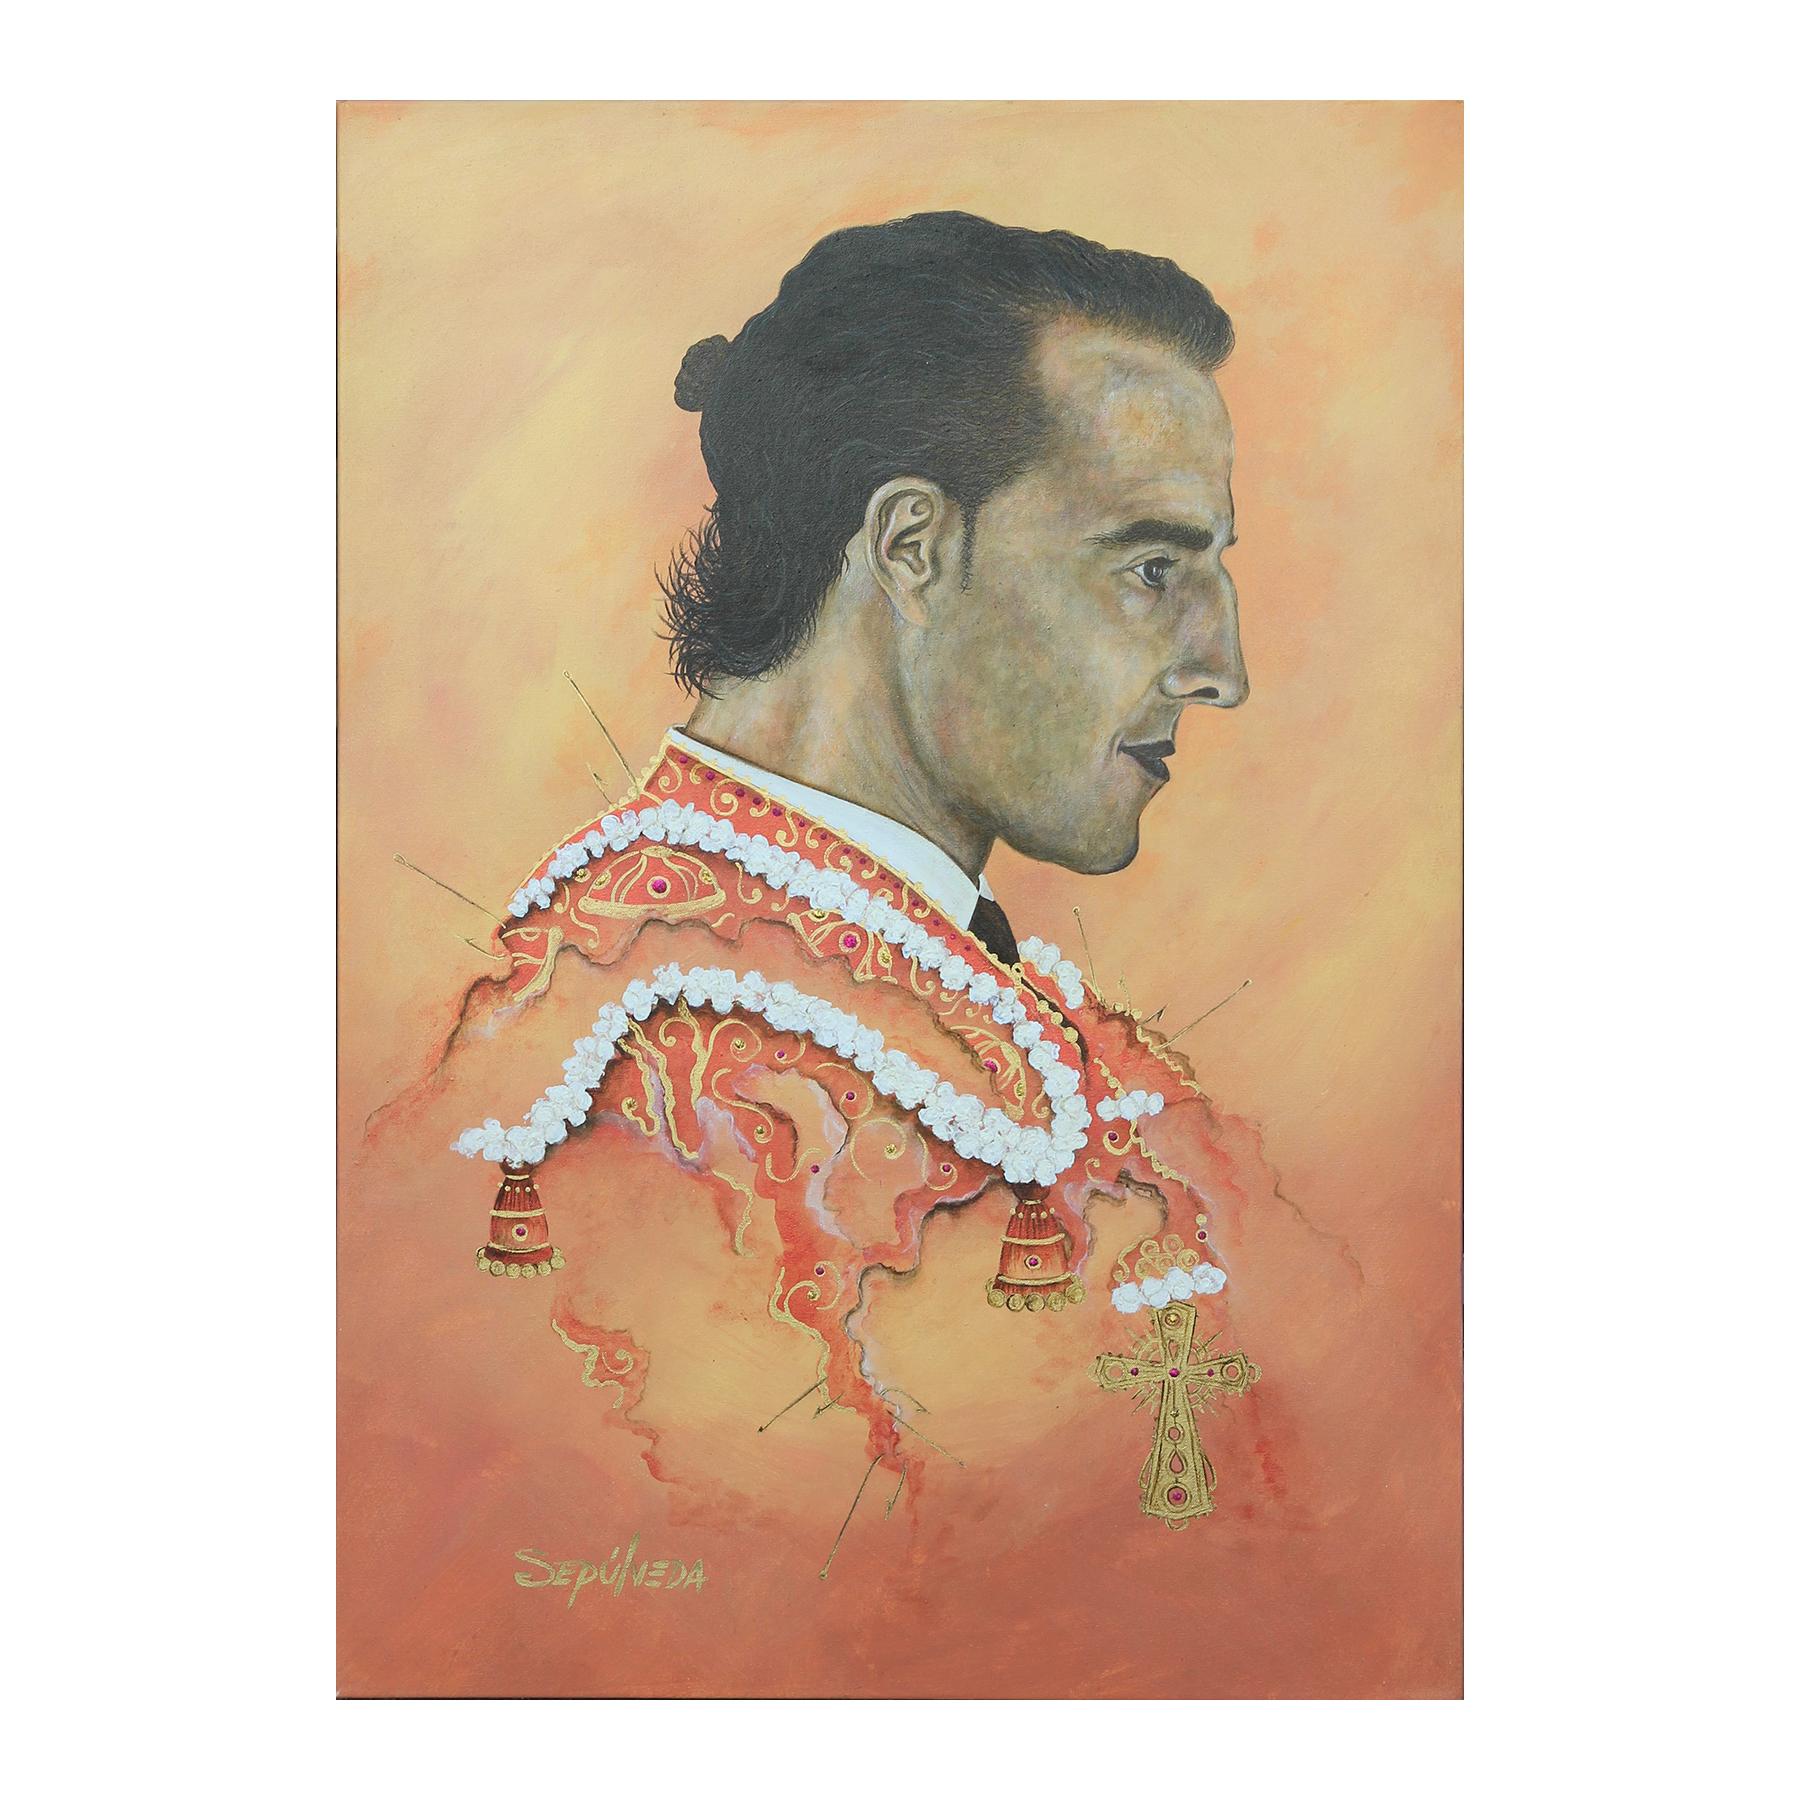 Benjamin Sepulveda Portrait Painting - "Fandino" Colorful Modern Spanish Matador Iván Fandiño Portrait